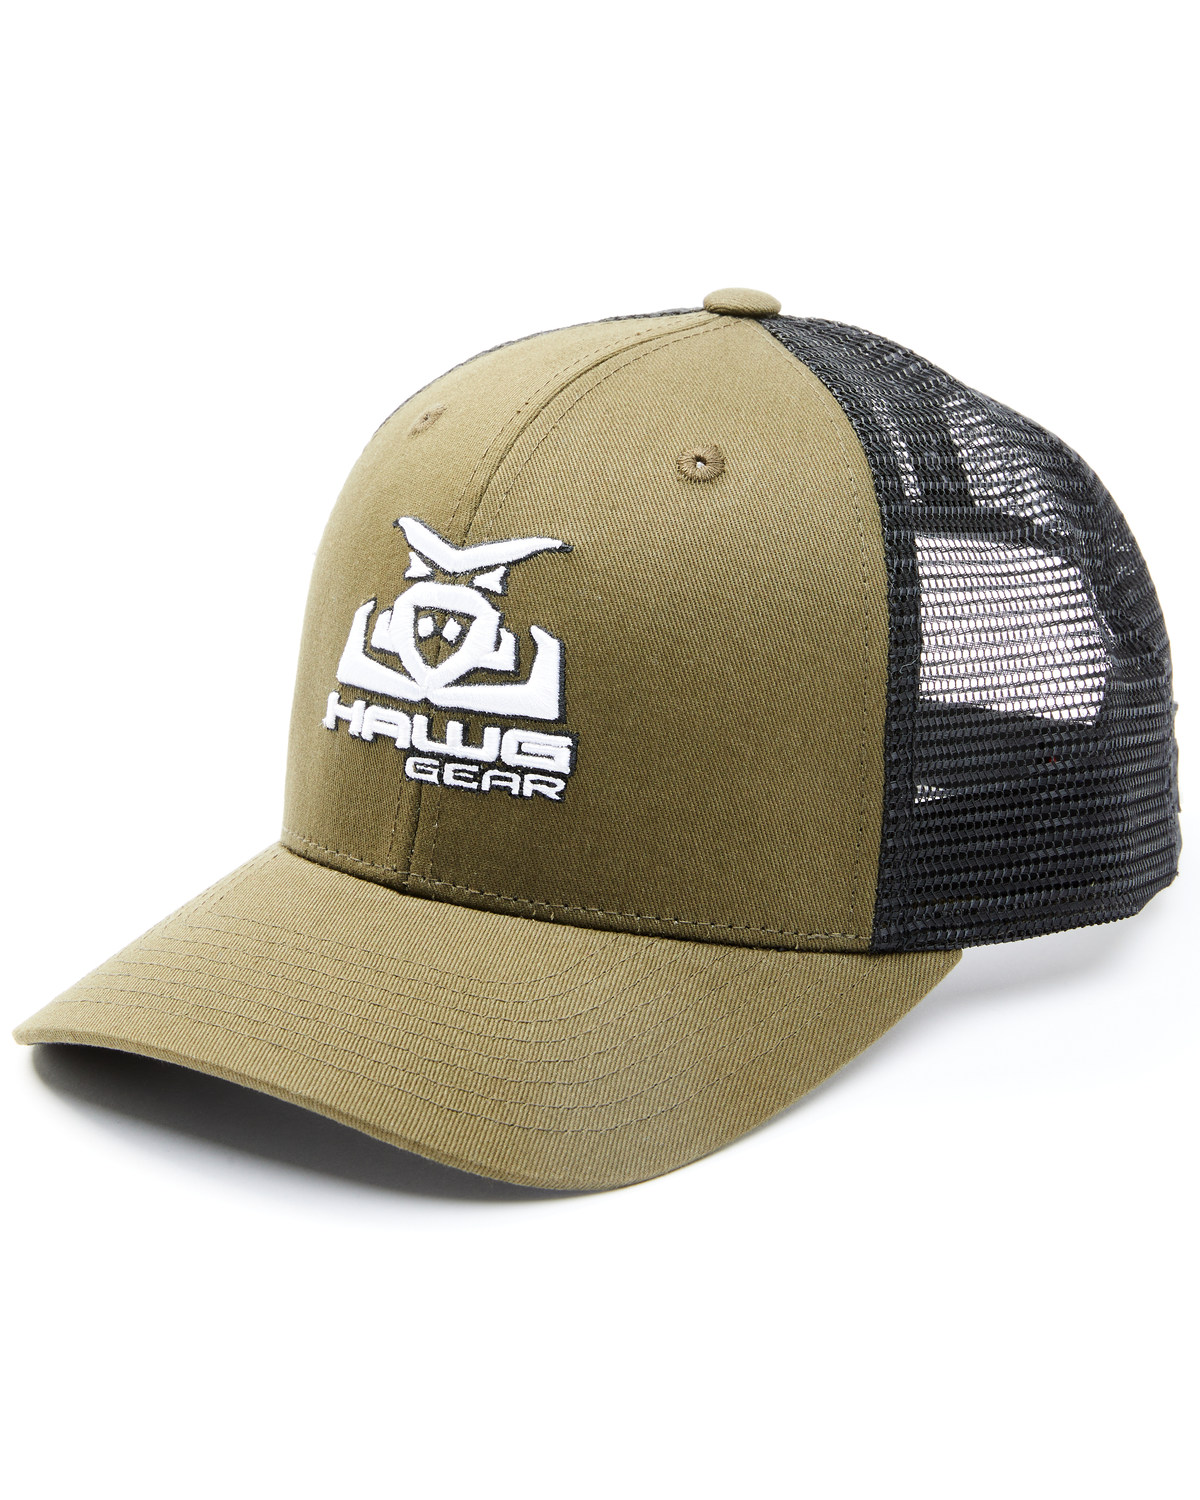 RopeSmart Men's Army Green & Black Embroidered Hawg Gear Logo Mesh-Back Trucker Cap